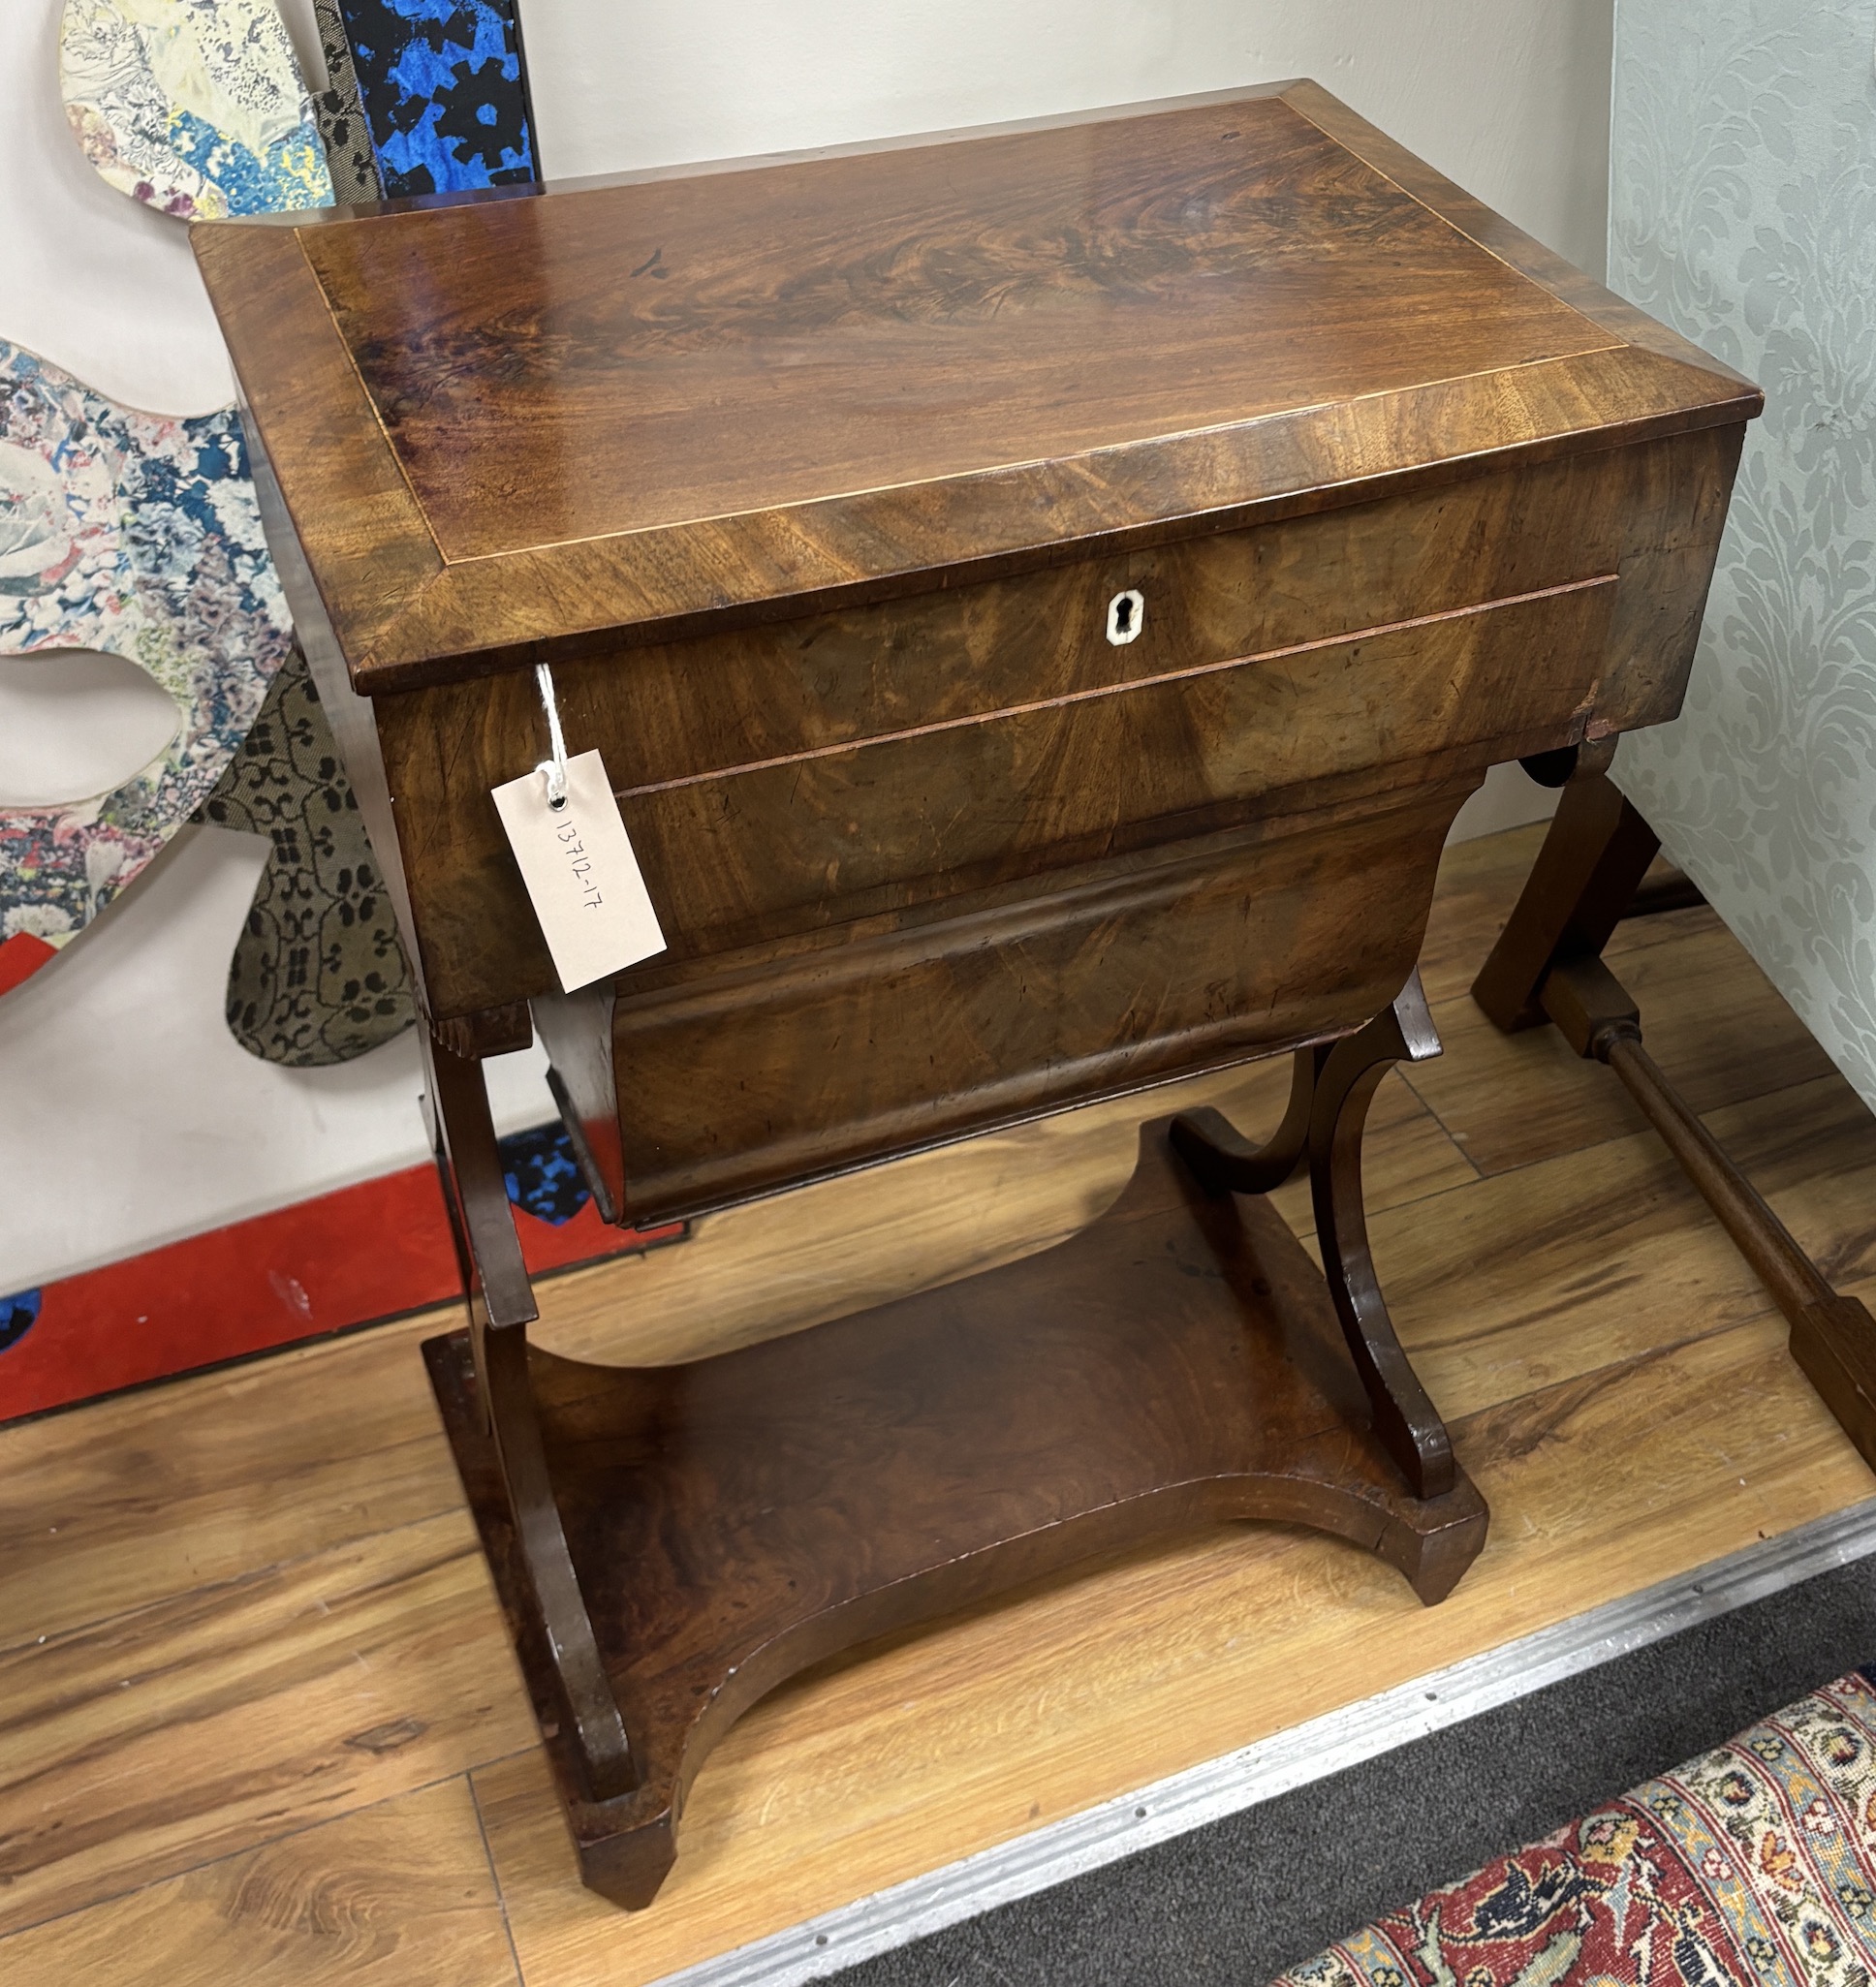 An early 19th century Dutch rectangular mahogany sewing table, width 49cm, depth 34cm, height 72cm